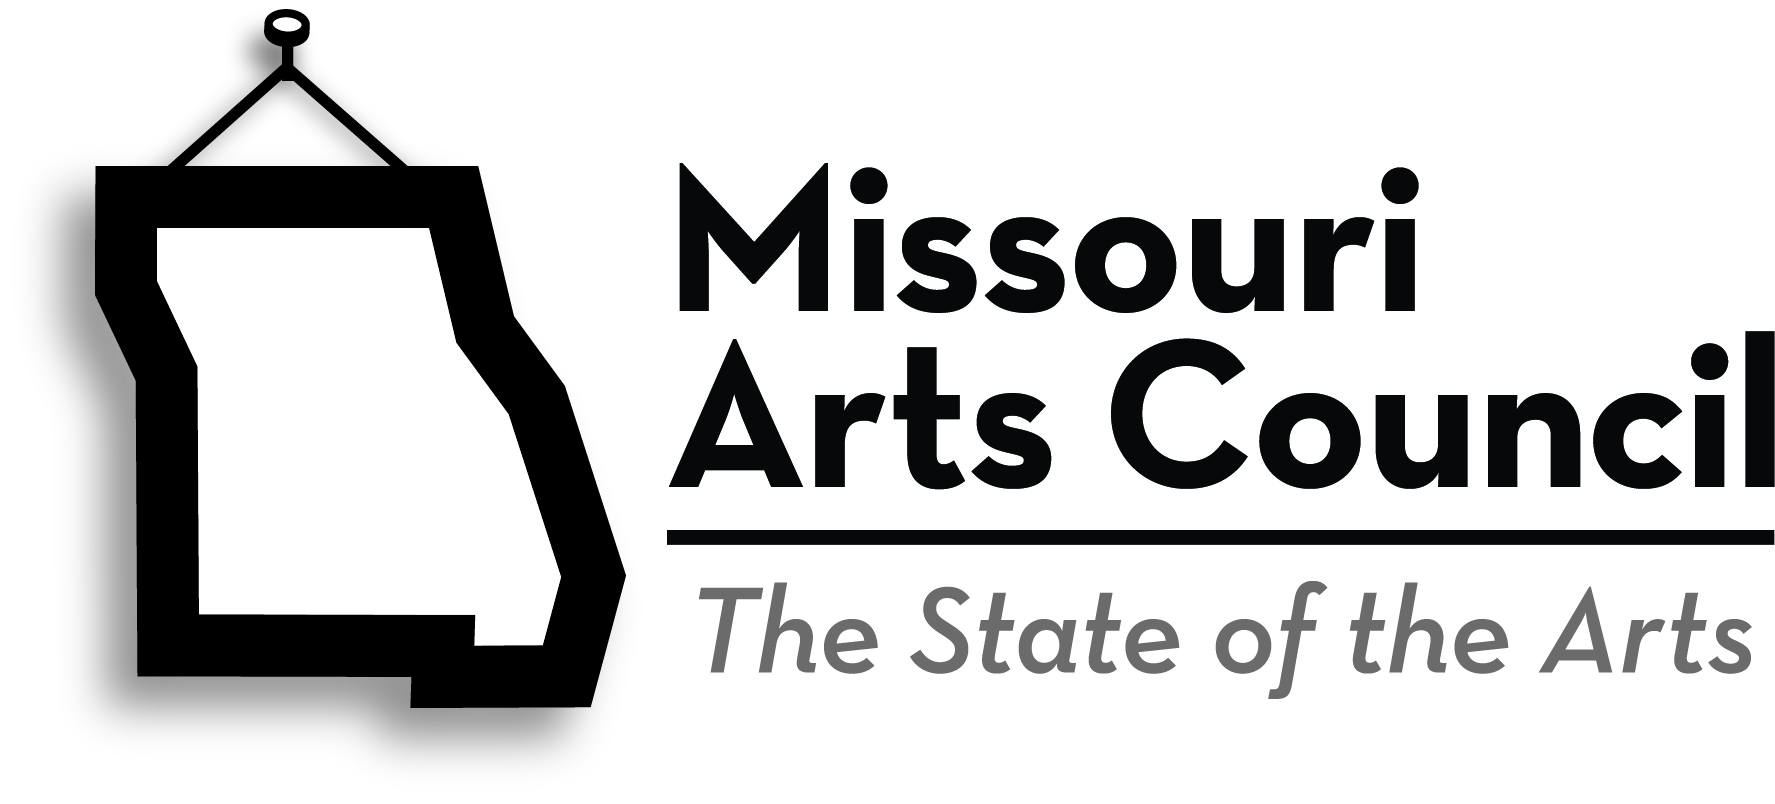 Missouri Arts Council logo.